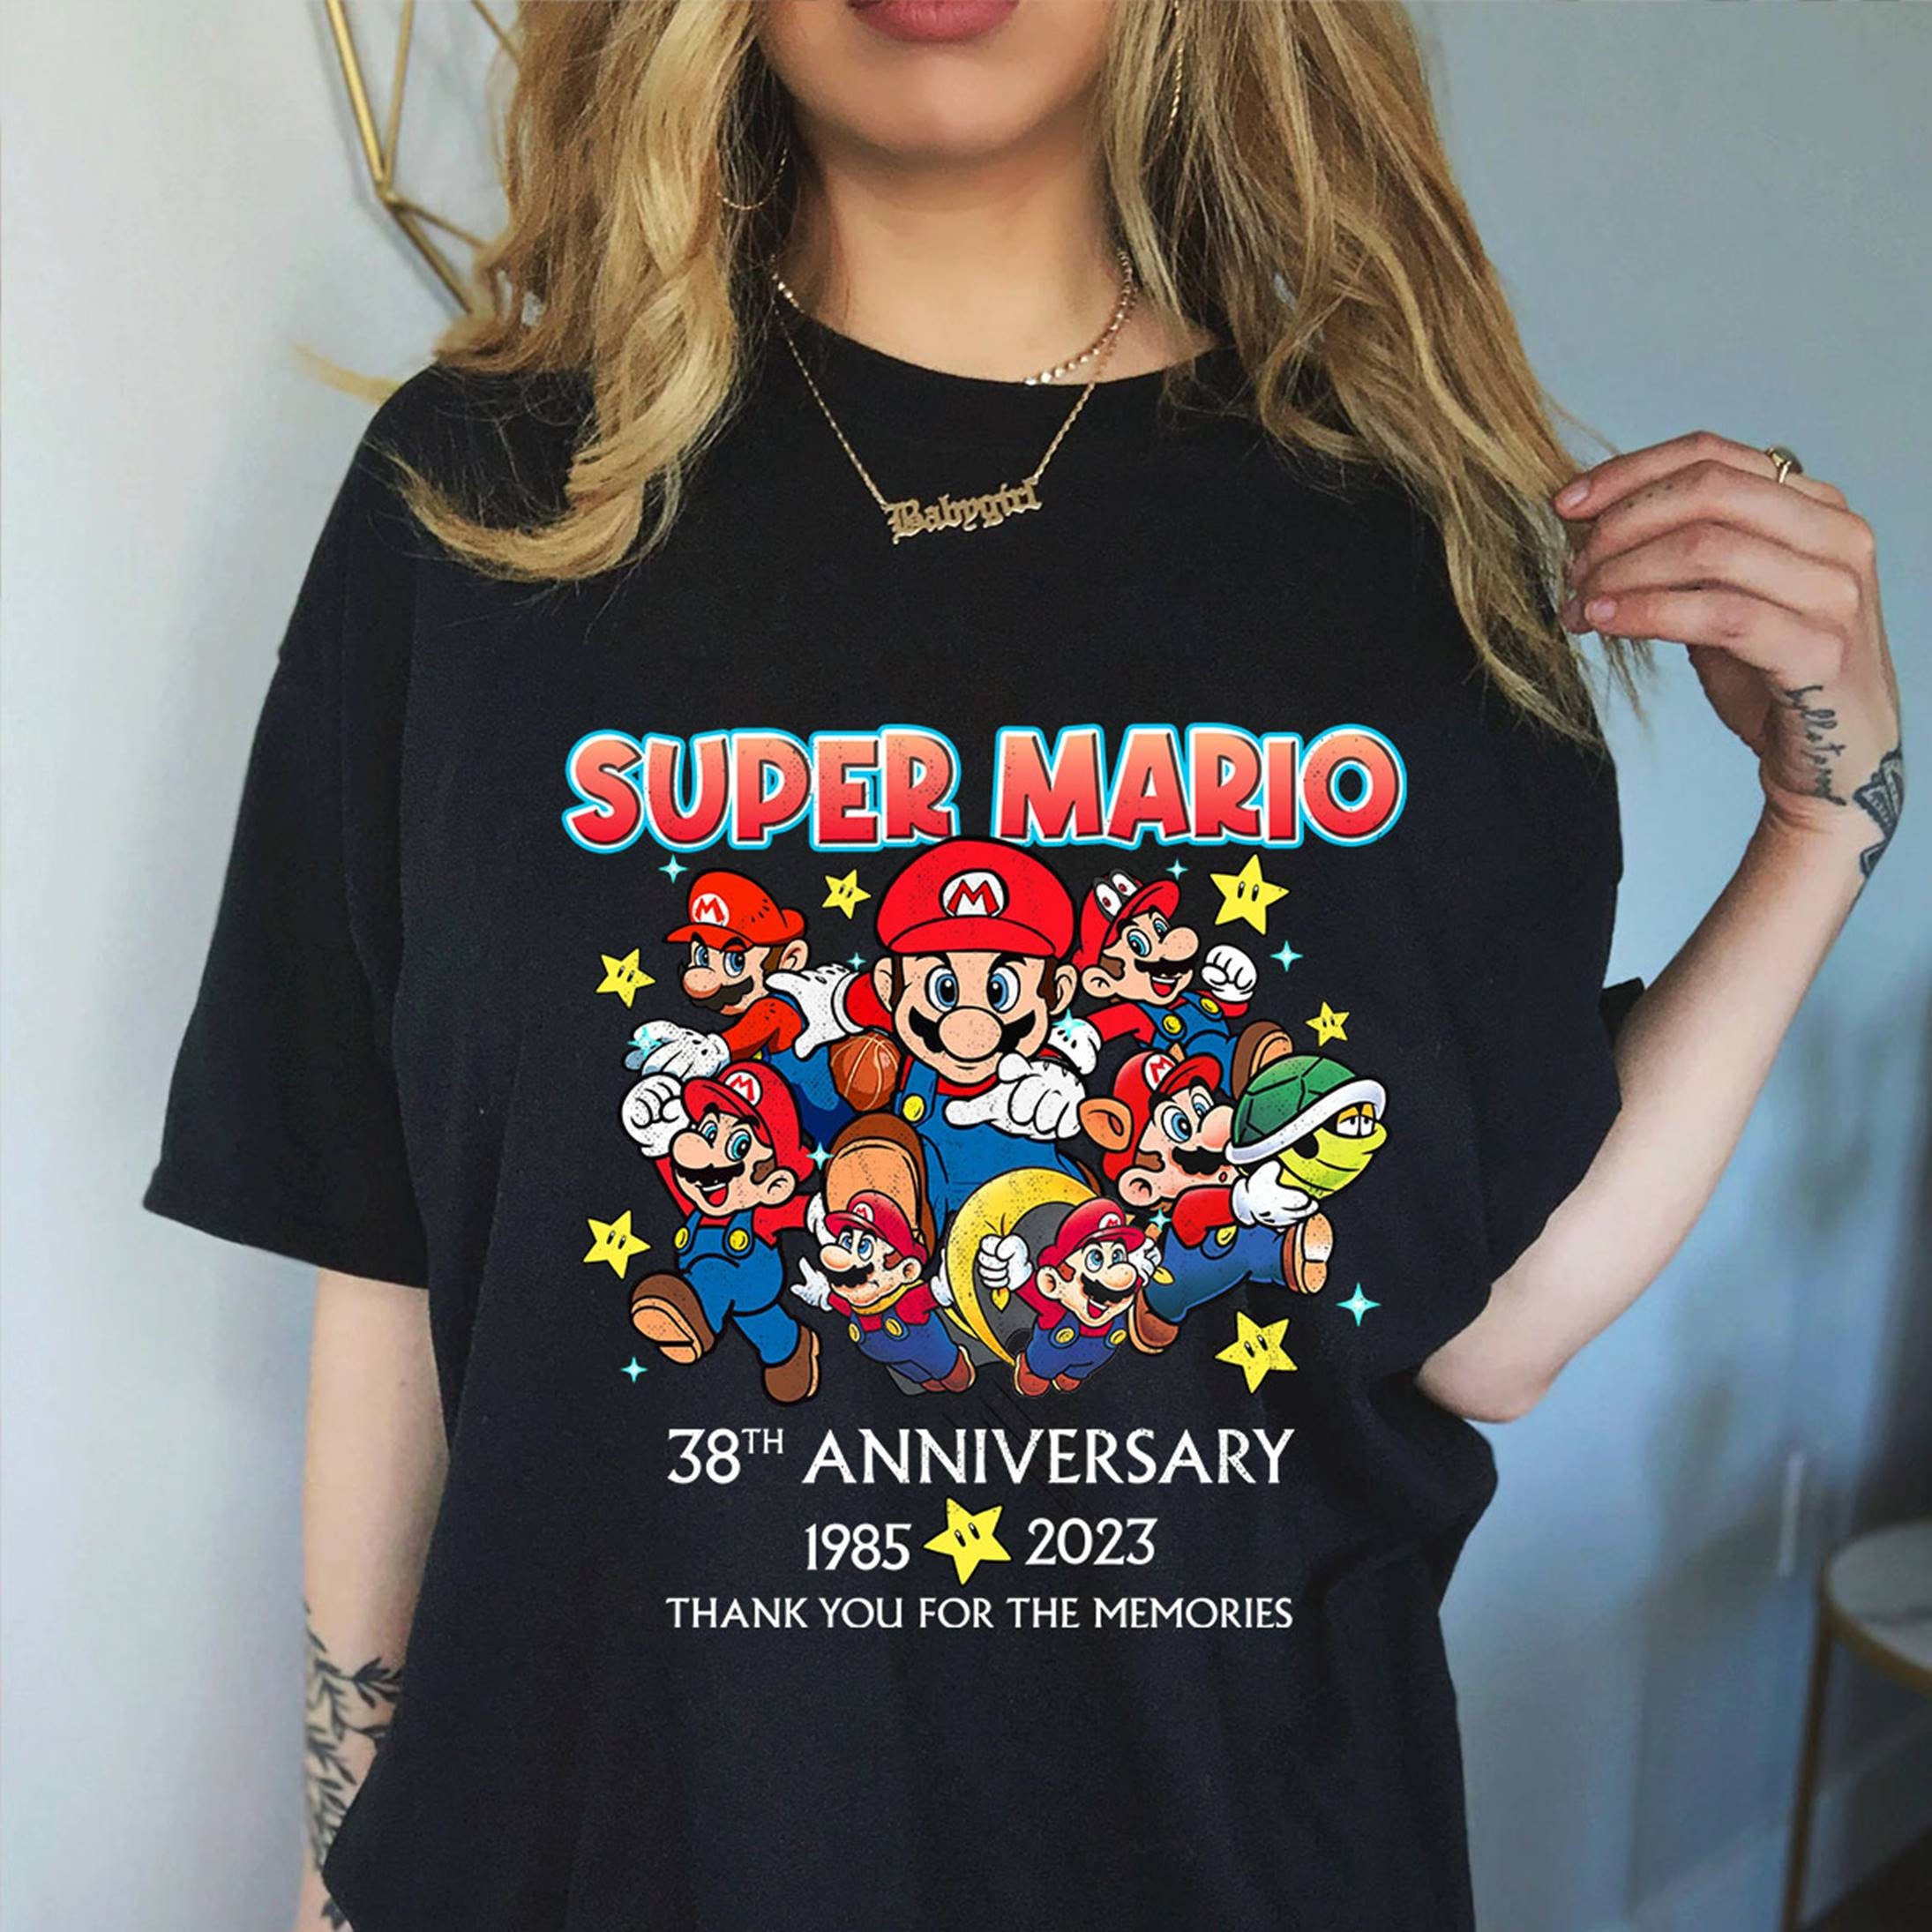 SUPER MARIO Games Evolution 1985-2023 